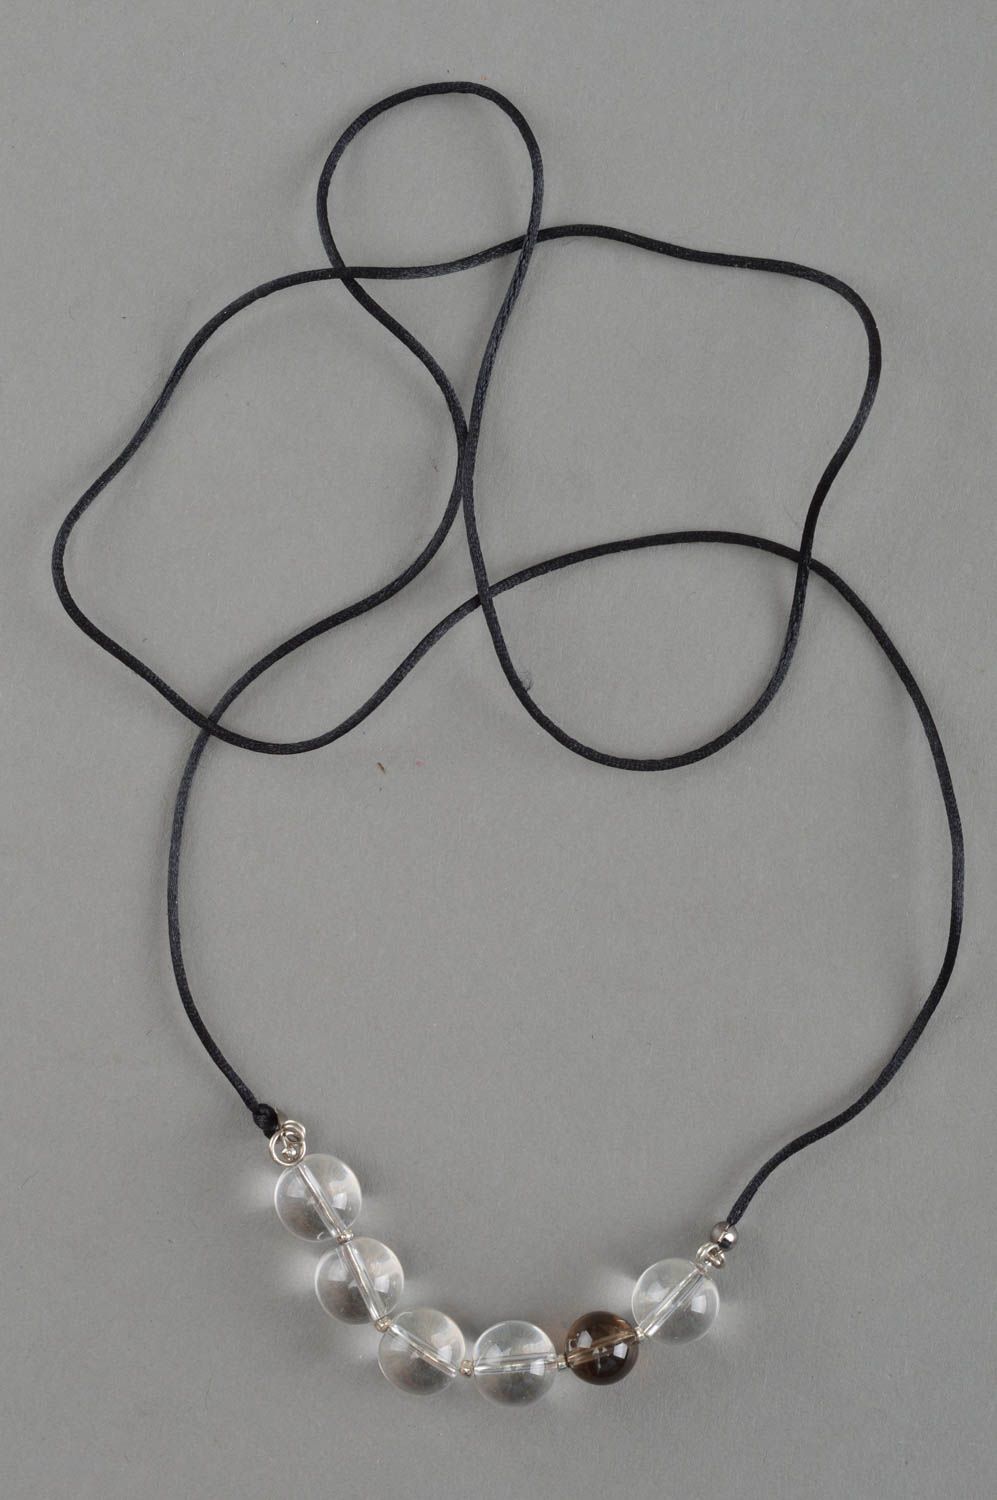 Handmade quartz necklace jewelry made of natural stones stylish accessory photo 2